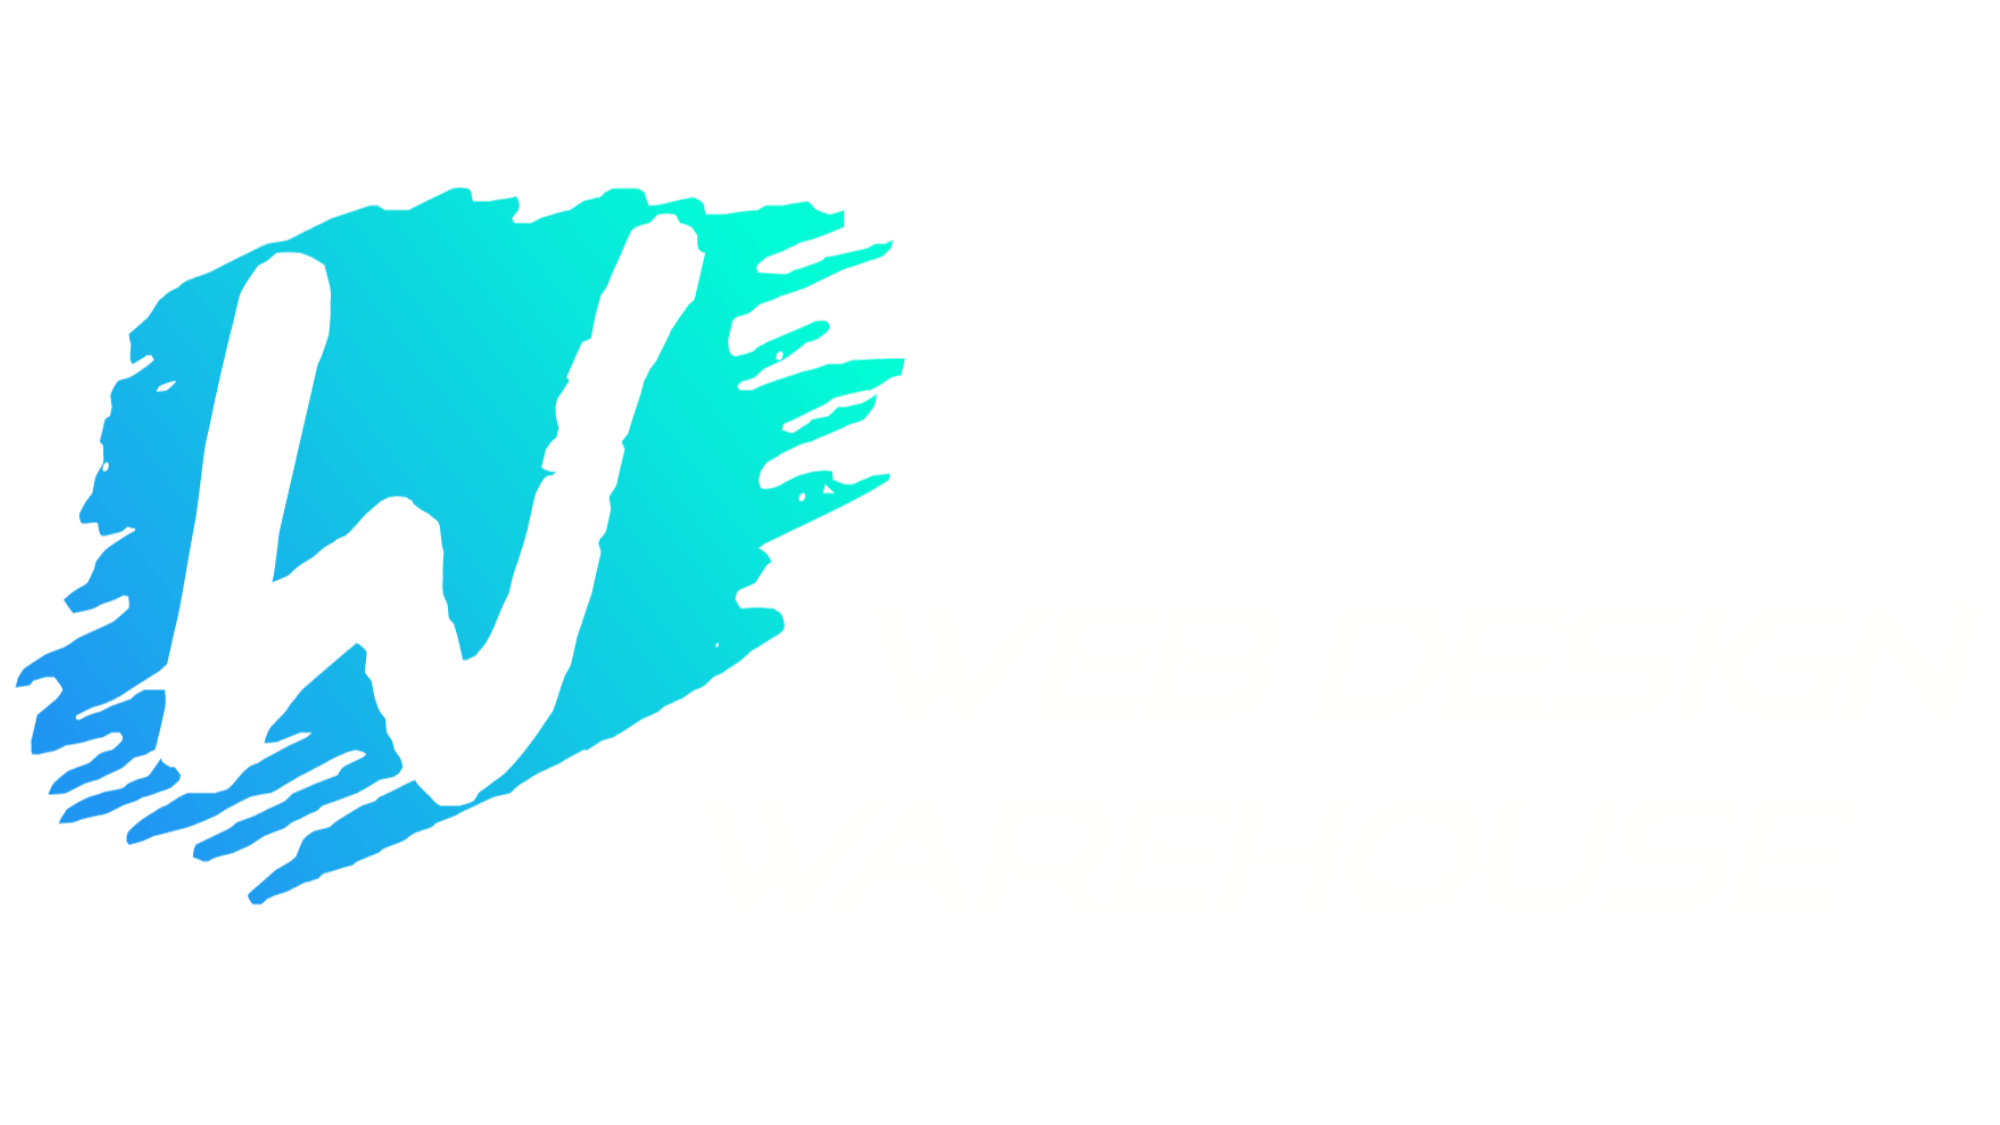 Web Design Warehouse